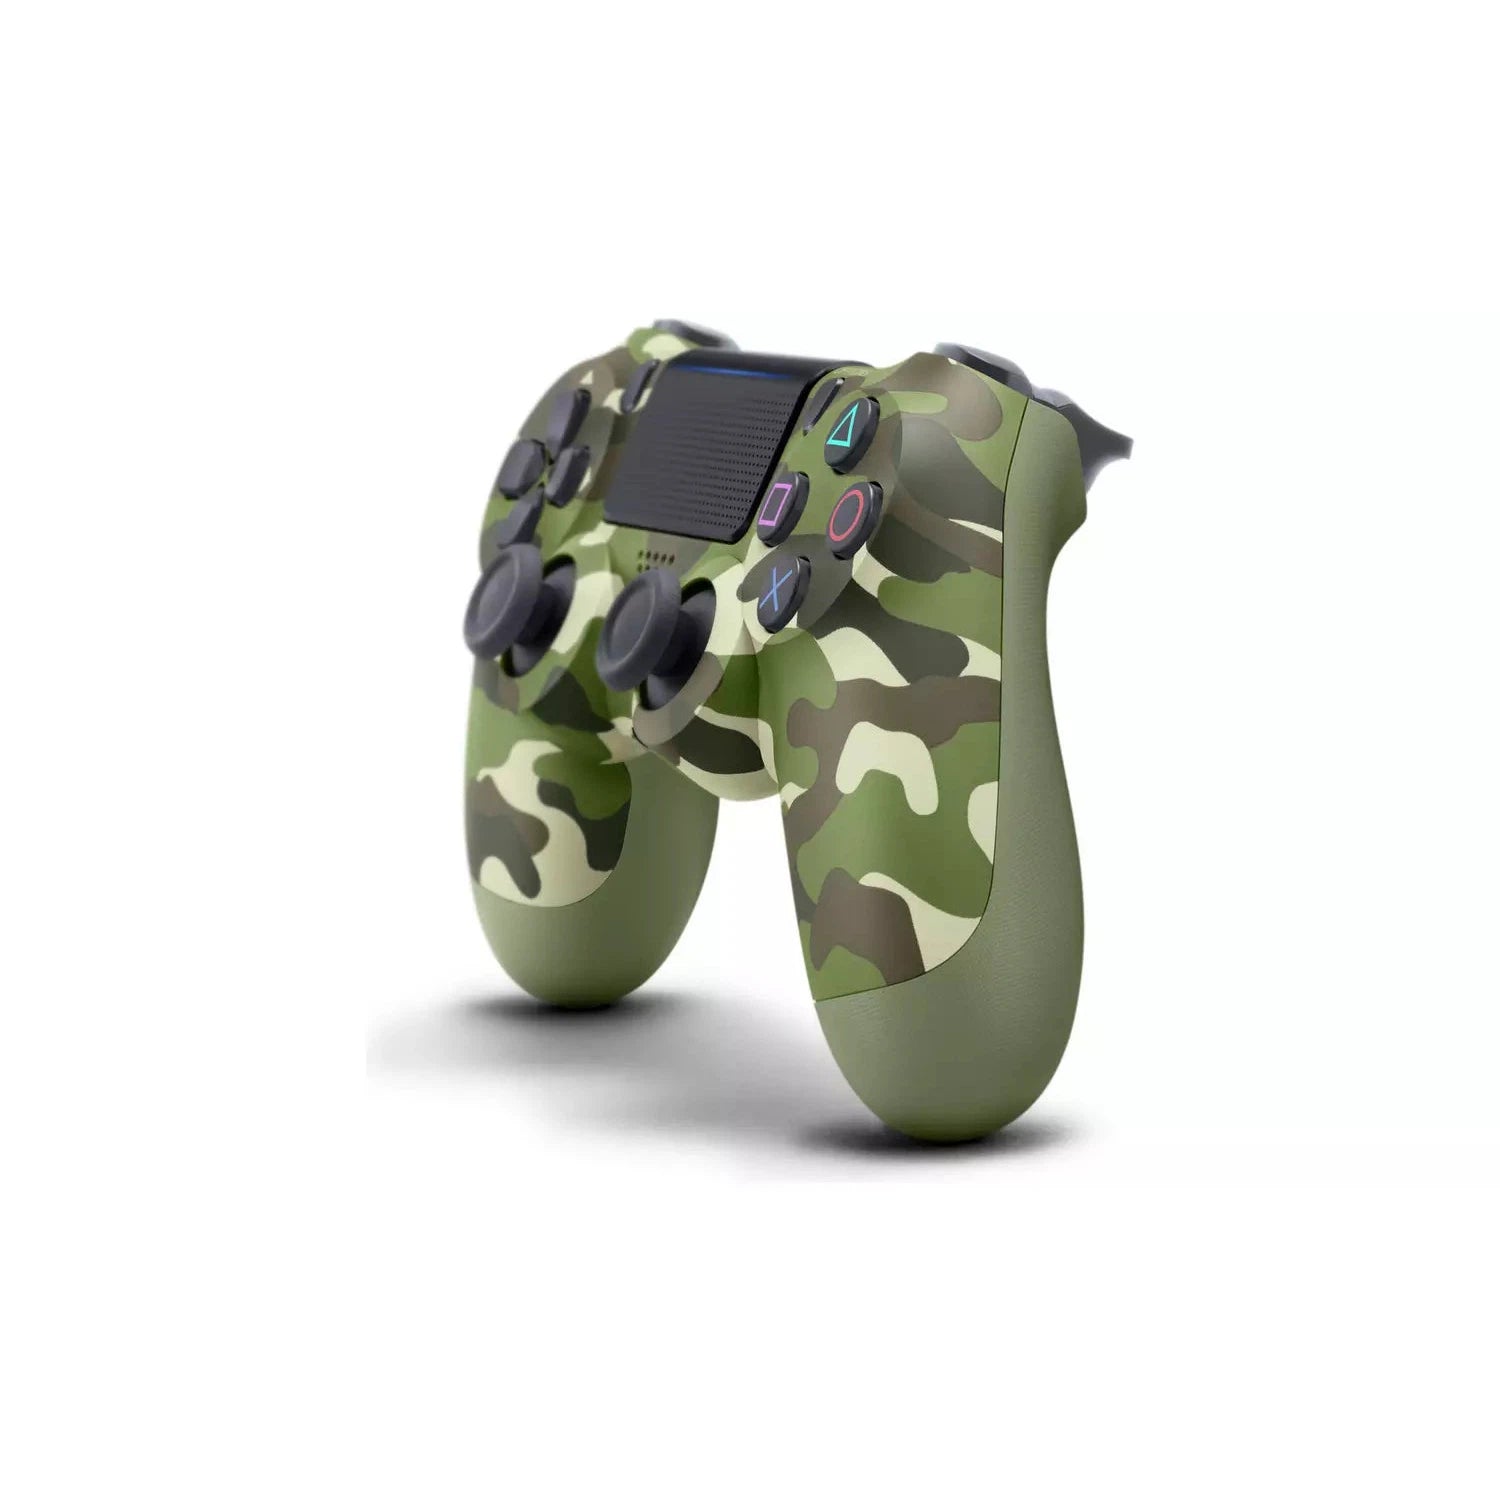 Sony PS4 DualShock 4 V2 Wireless Controller - Green Camo - Refurbished Pristine